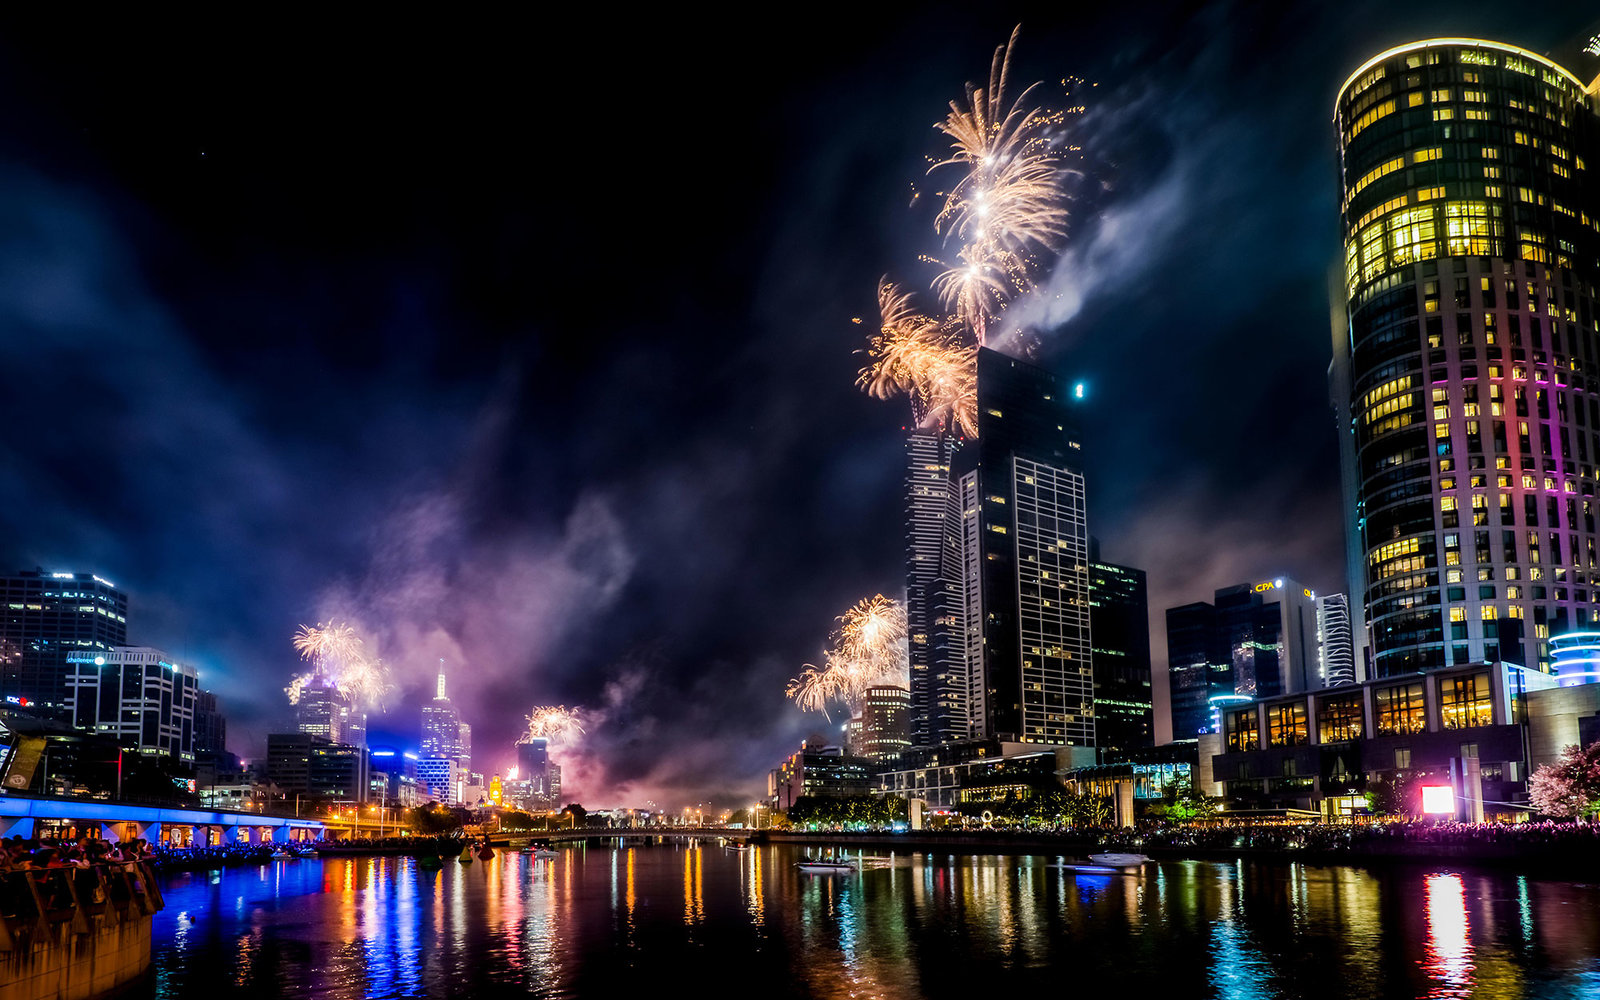 Spectacular fireworks along the Yarra River light up the night sky over Melbourne Australia.